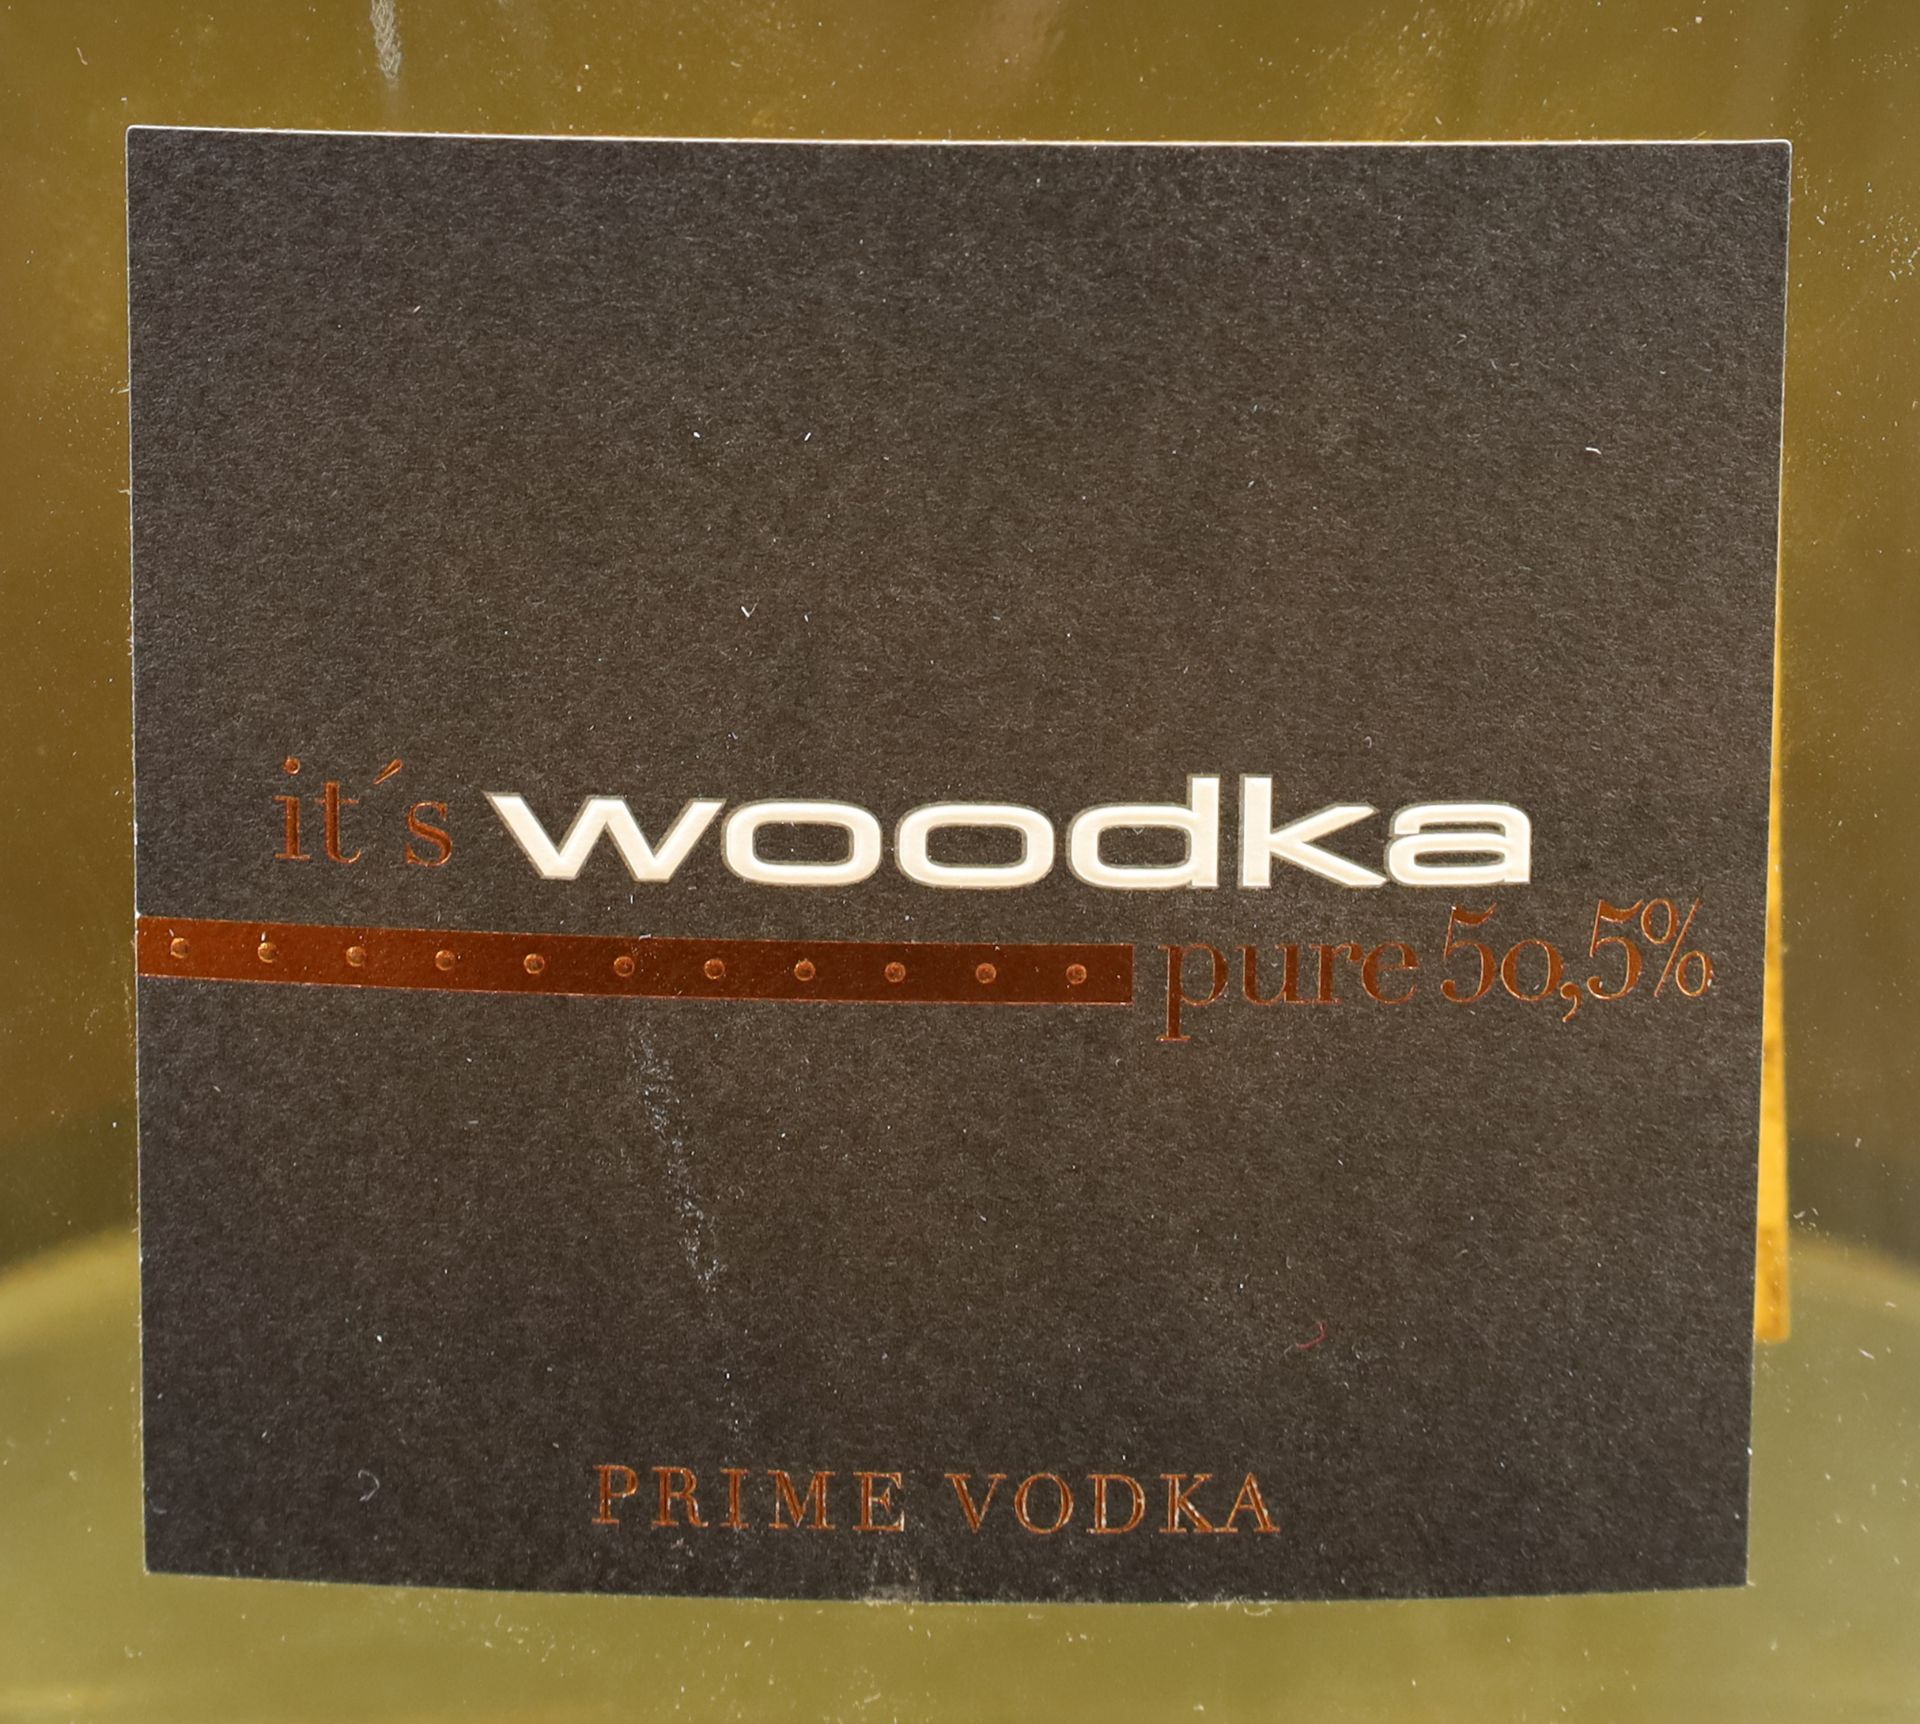 1 bottle of WOODKA. Vodka. Germany. 50.5 % vol. - Image 2 of 6